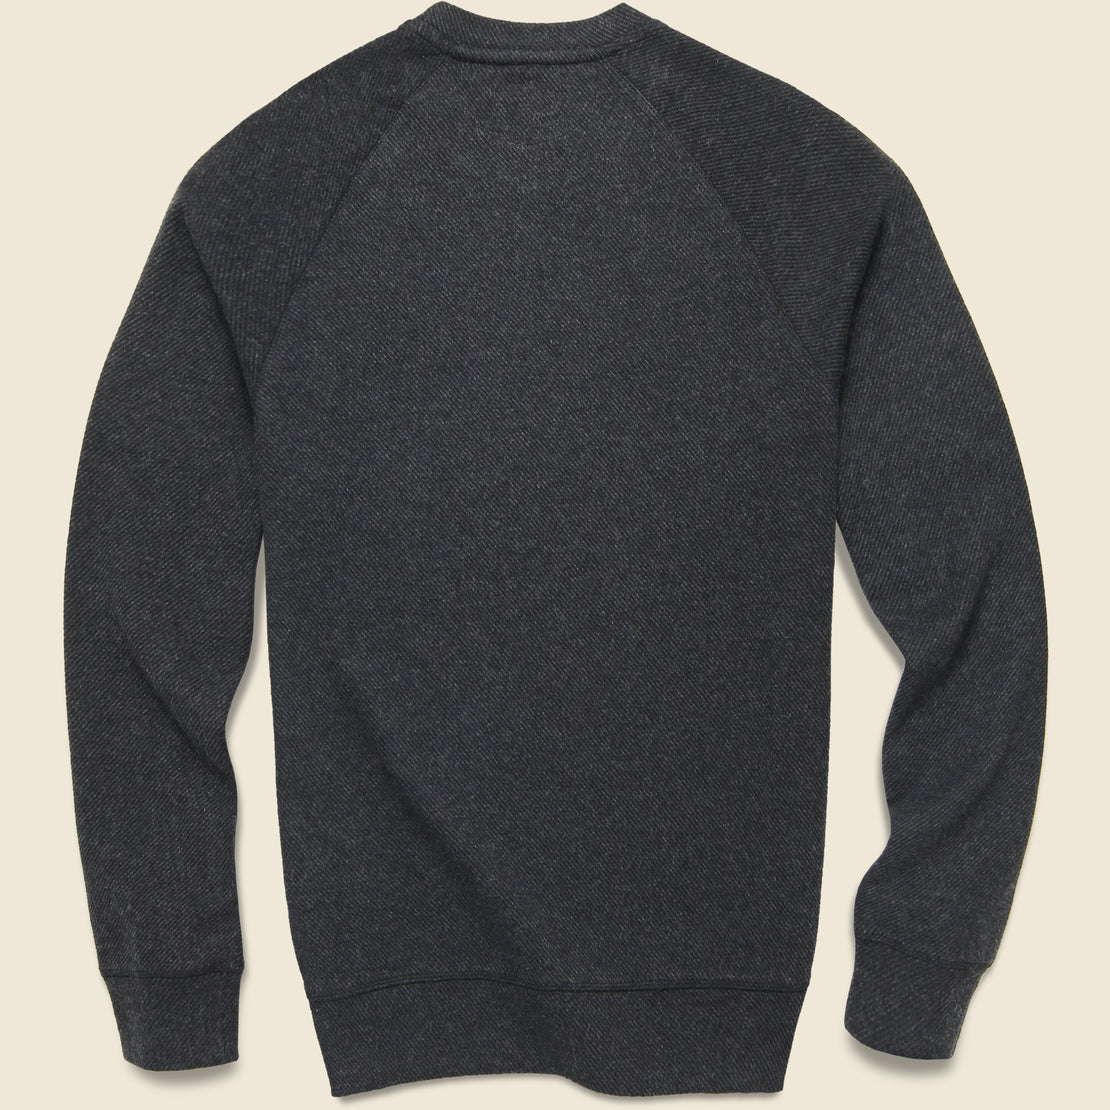 Legend Sweater Crew - Heathered Black Twill